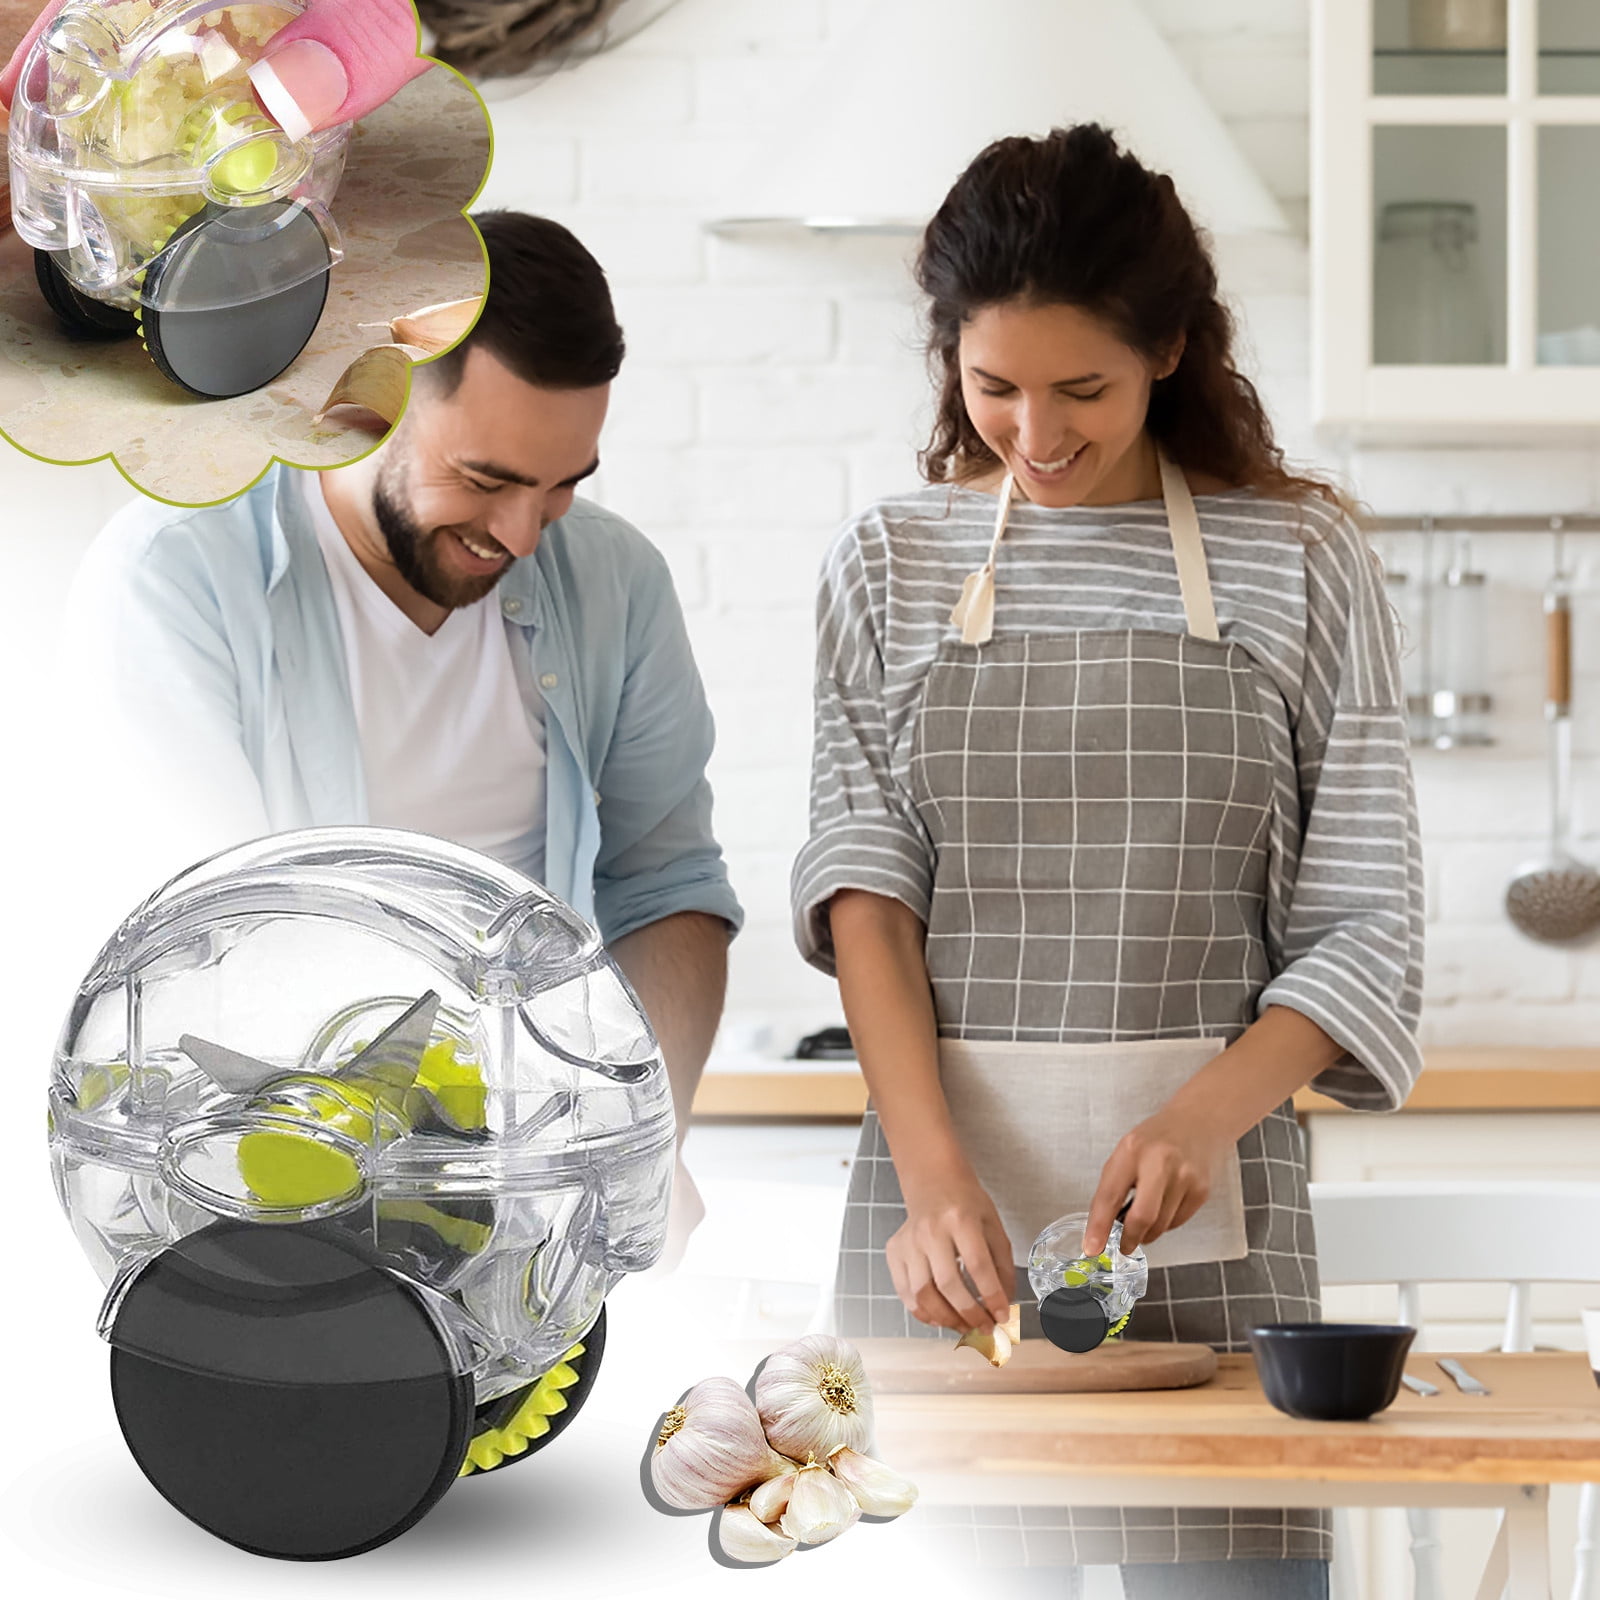 Mini Garlic Crusher Press Grater Peeler Grinder Tools Gadgets for Kitchen  Accessories Vegetable Cutter Home Garlic Chopper